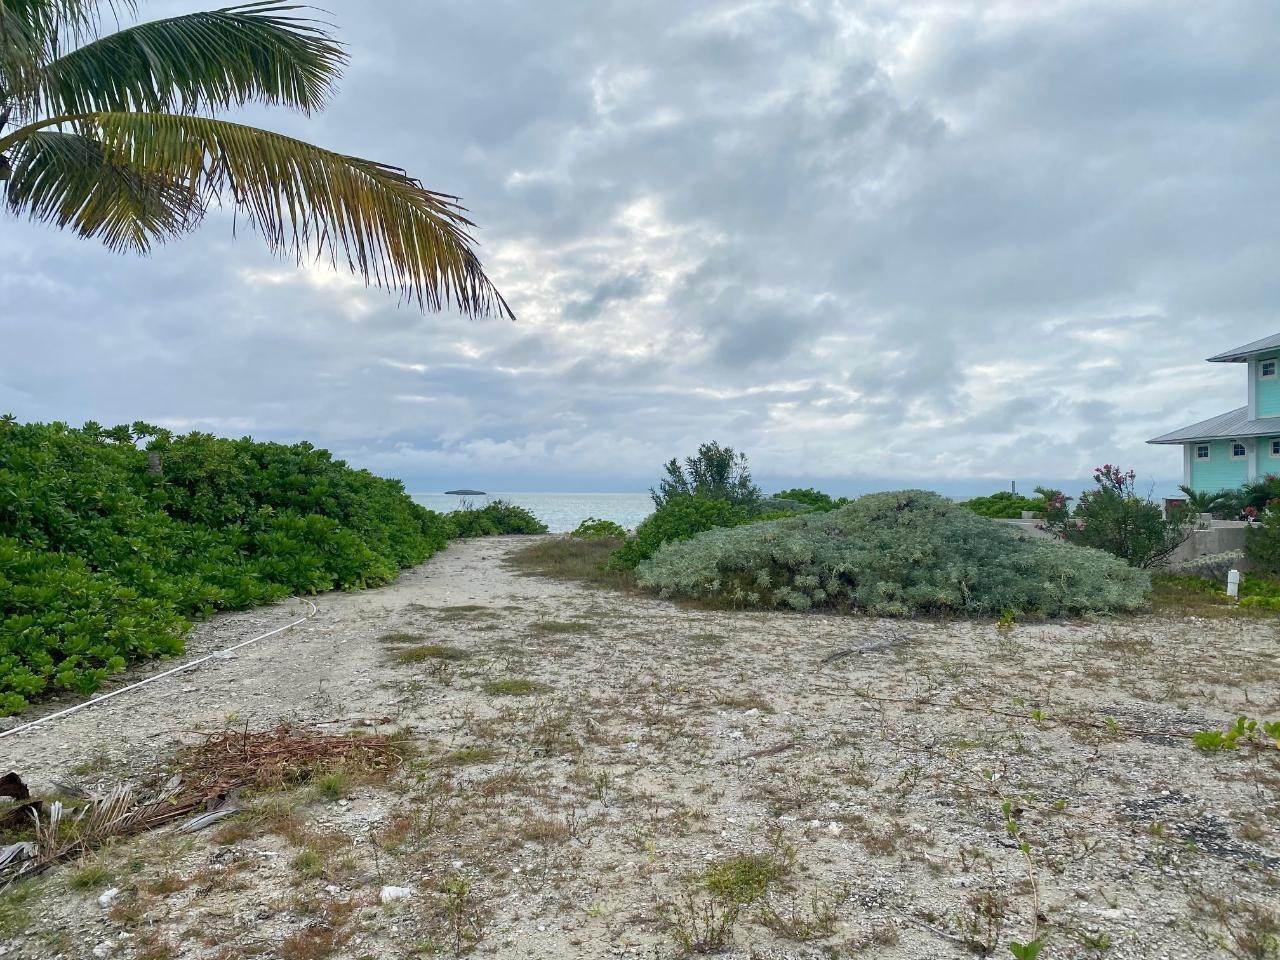 13. Lots / Acreage for Sale at Chub Cay, Berry Islands, Bahamas